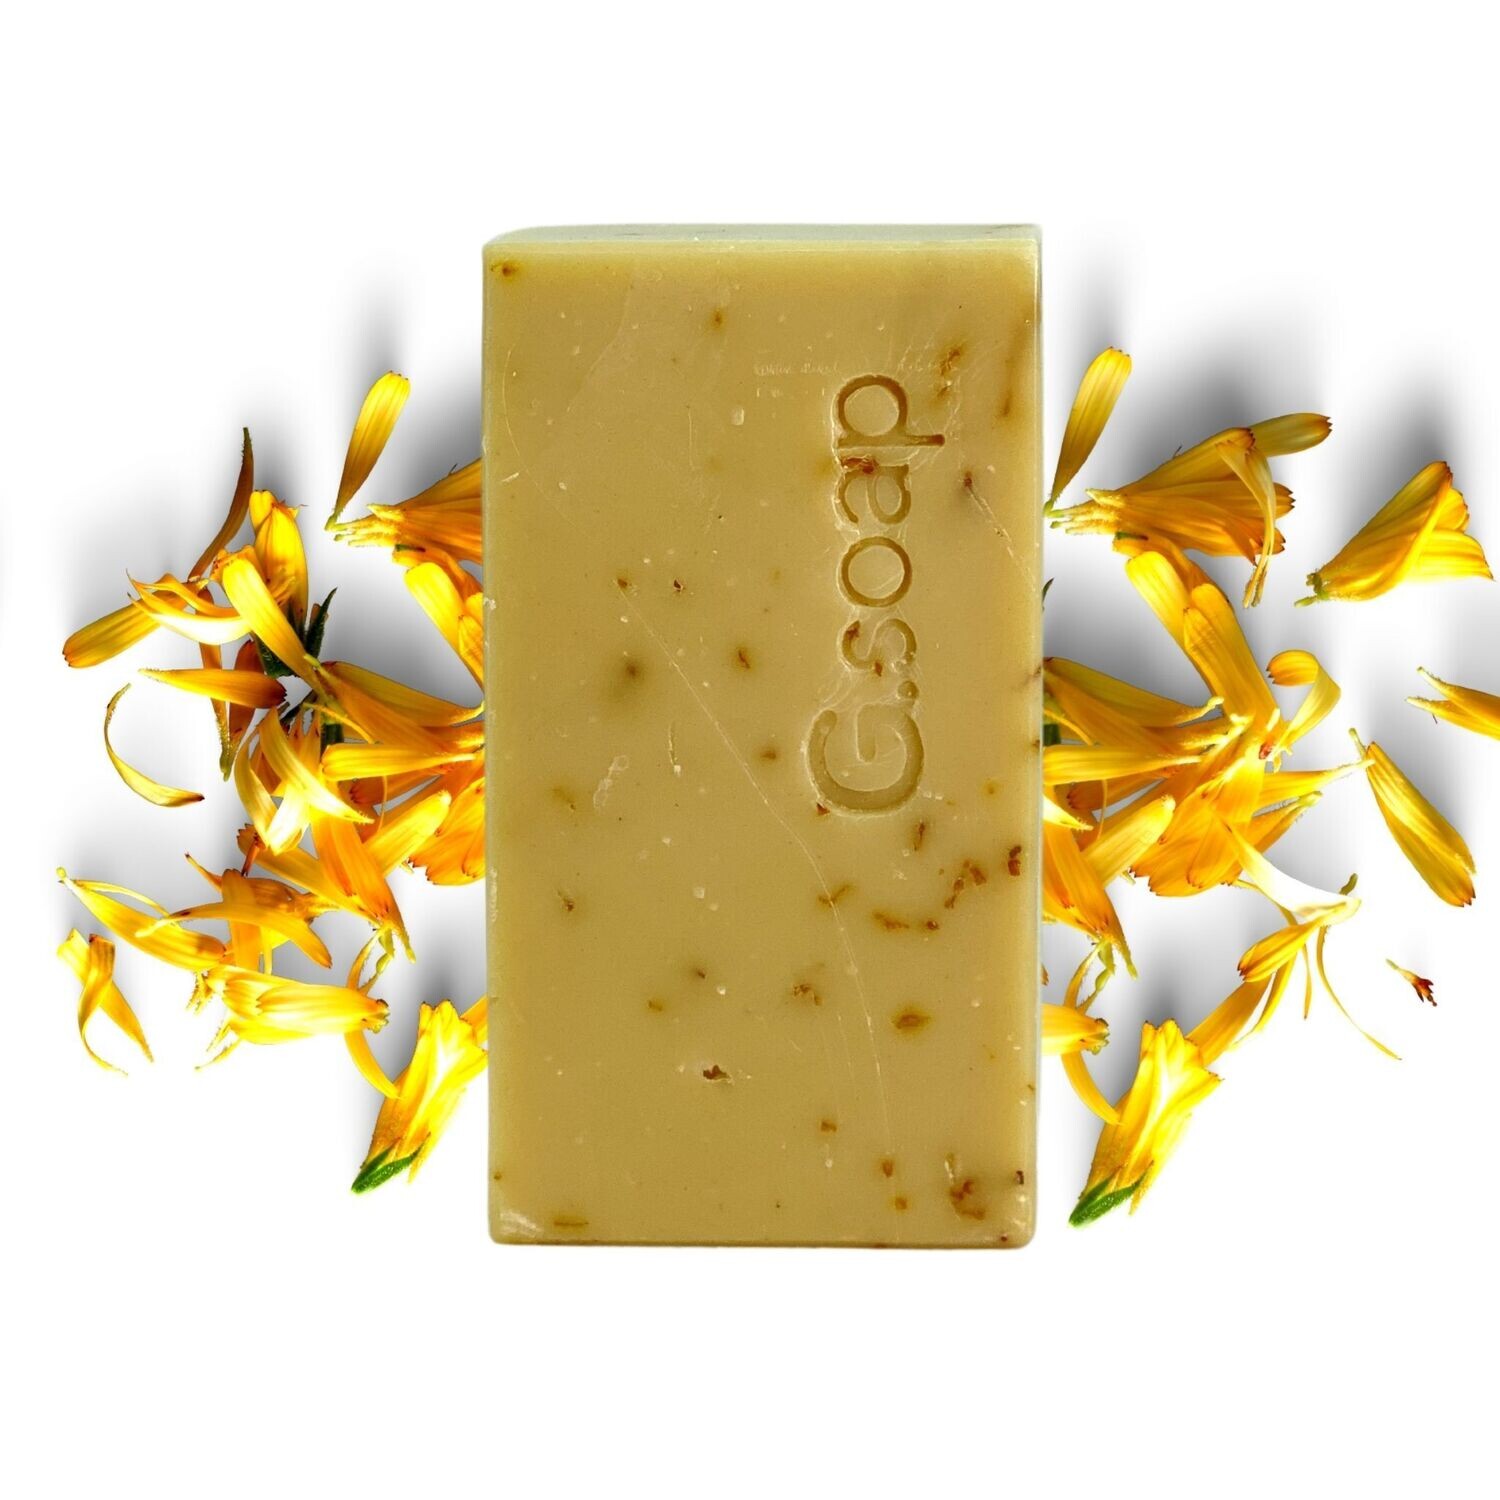 G.soap Calm Soap Bar